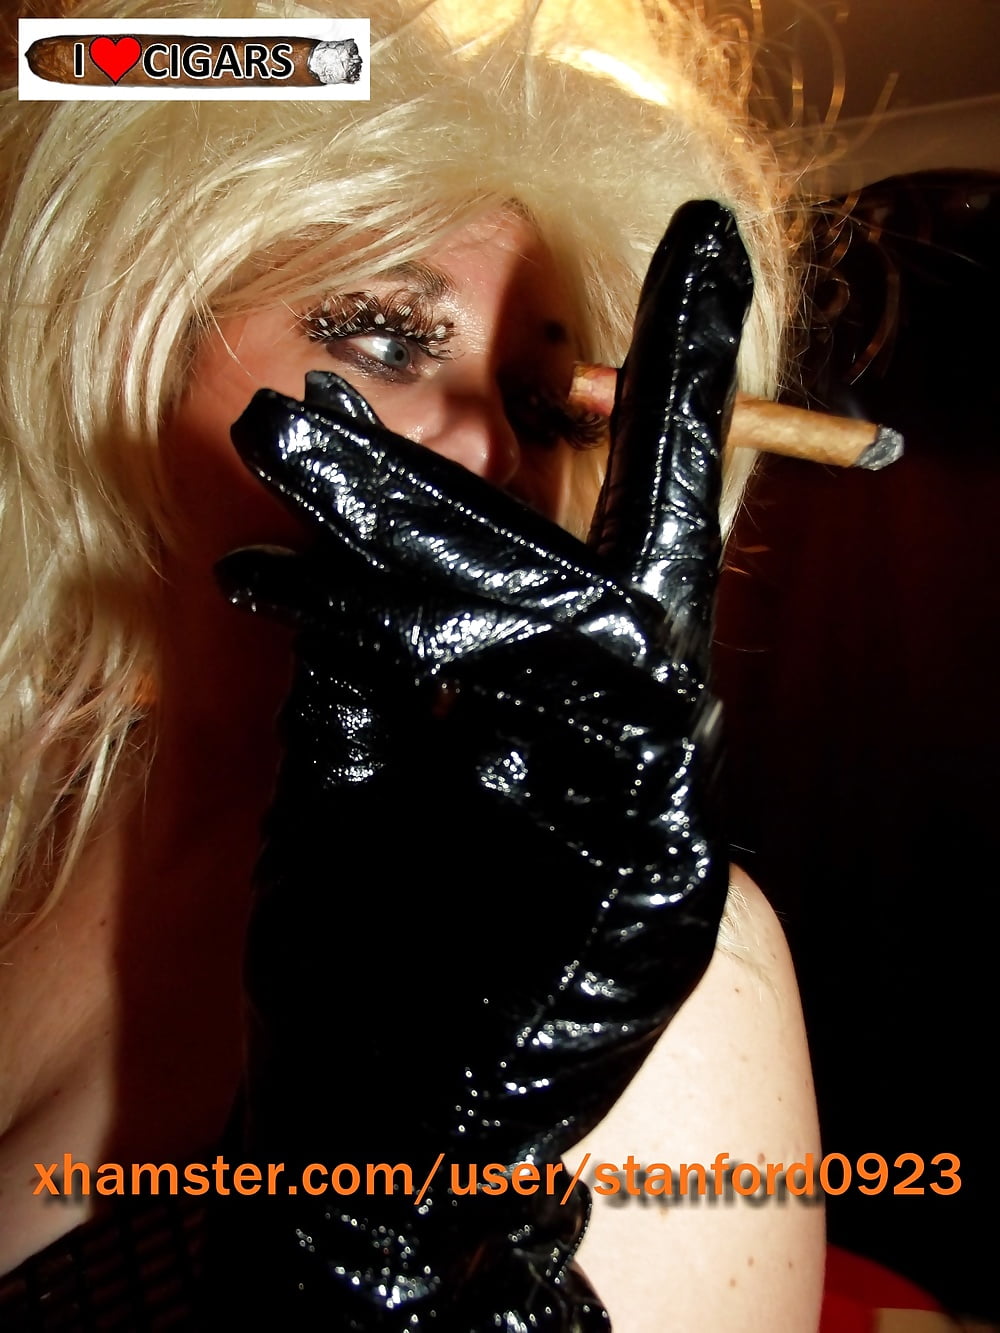 SEXY WOMEN SMOKE CIGARS